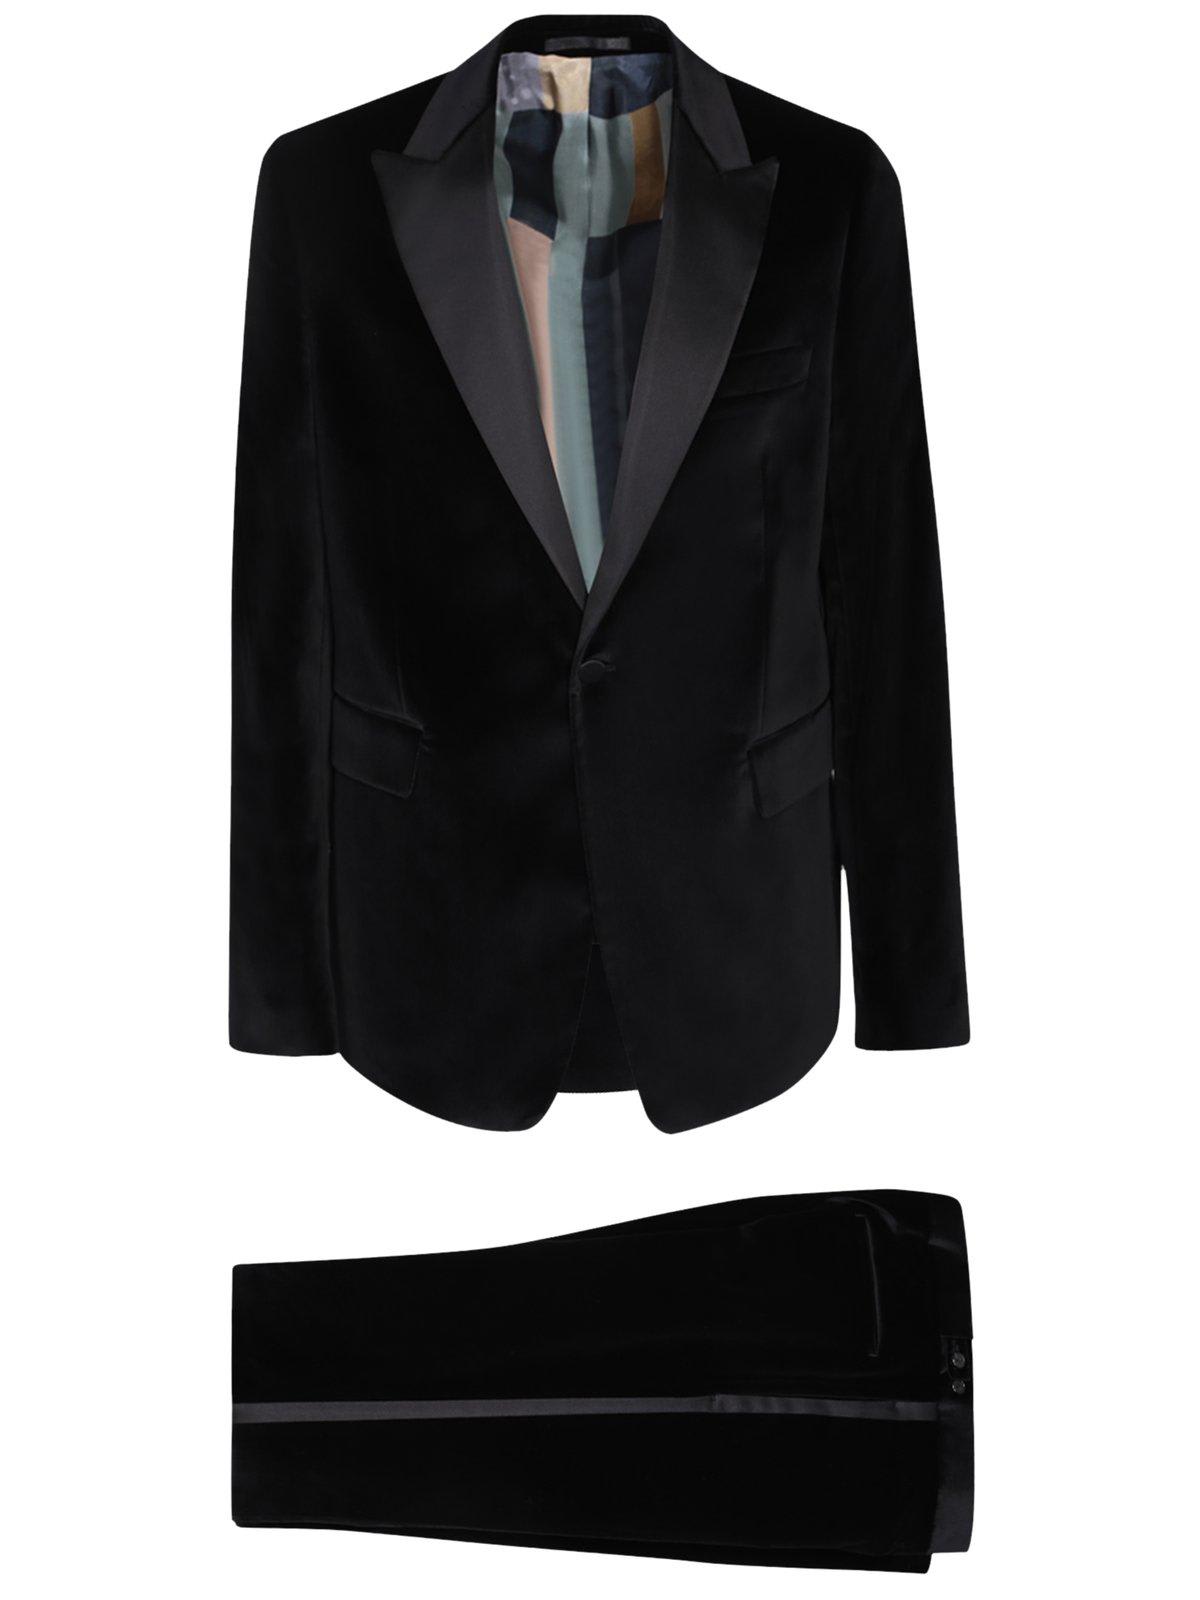 paul smith velvet evening suit